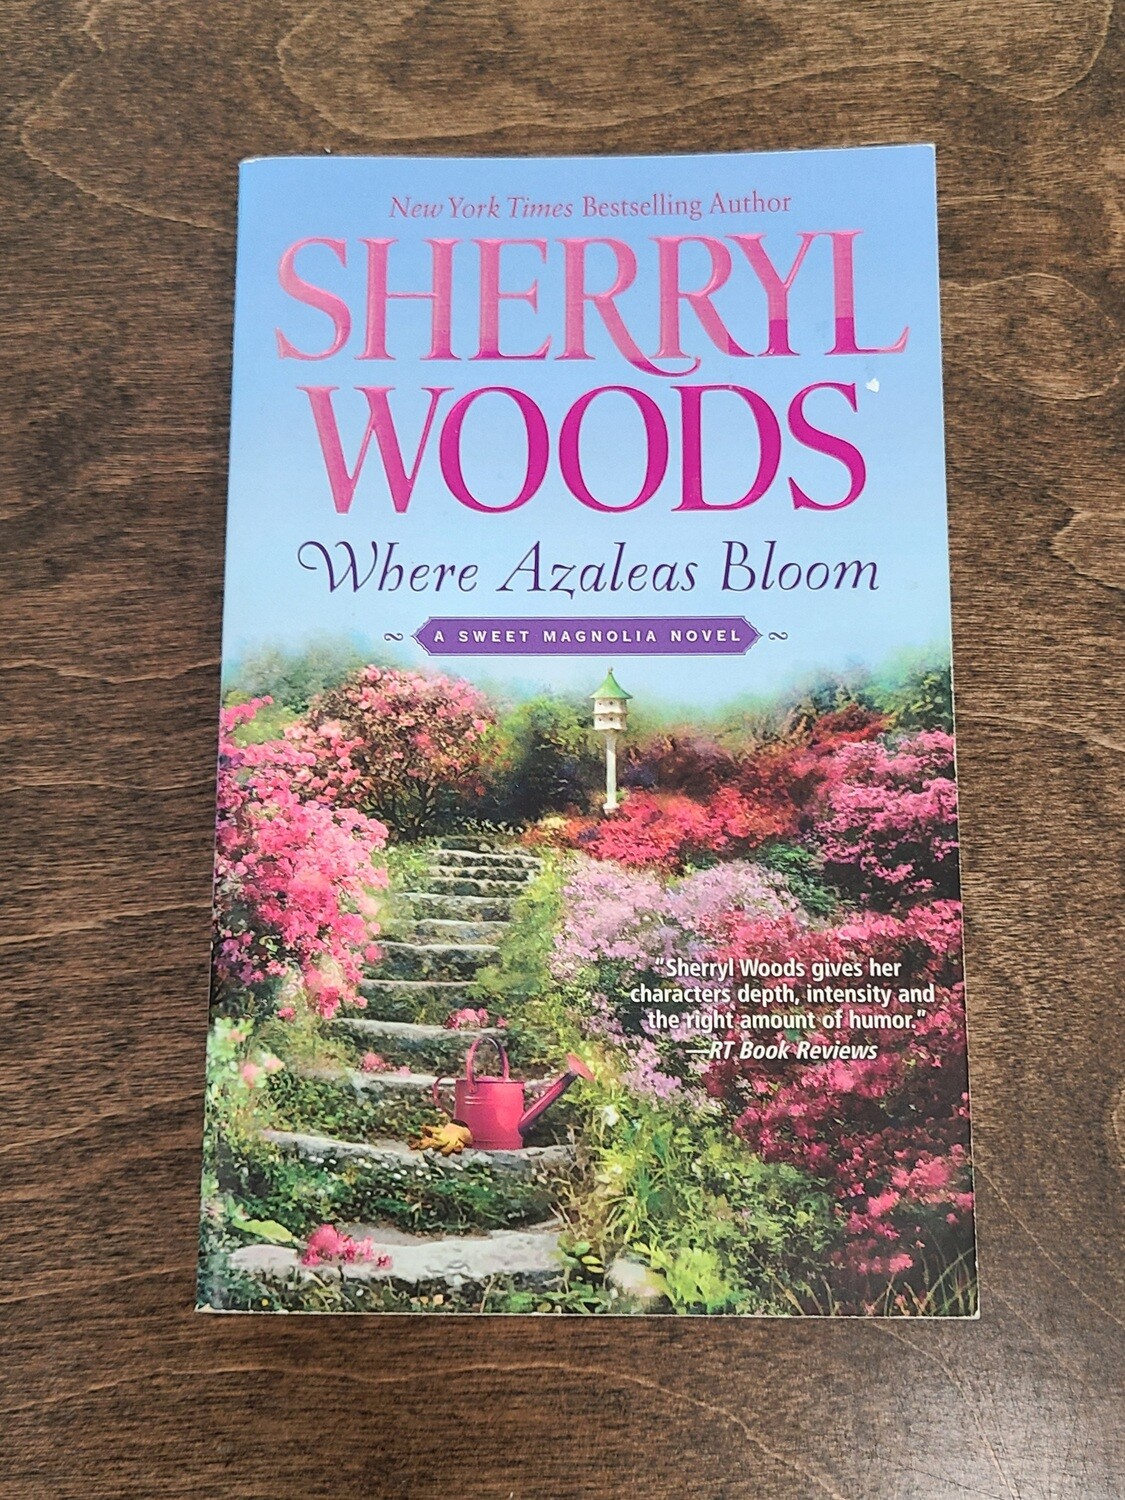 Where Azaleas Bloom by Sherryl Woods